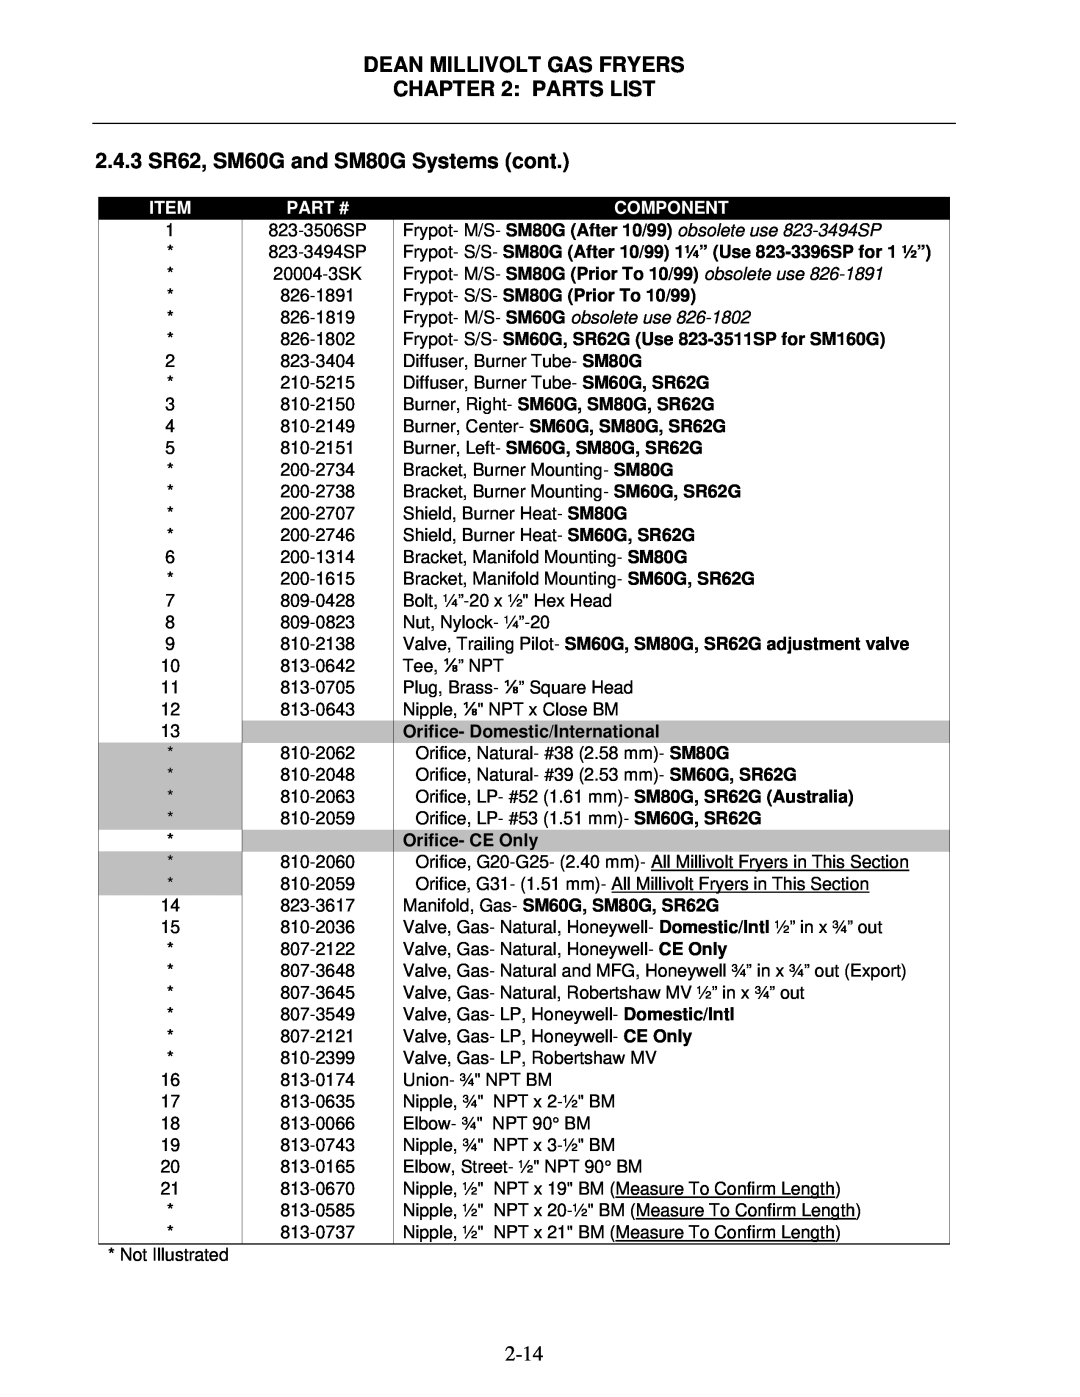 Frymaster Super Marathon Series Dean Millivolt Gas Fryers, Parts List, 2.4.3 SR62, SM60G and SM80G Systems cont, Item 